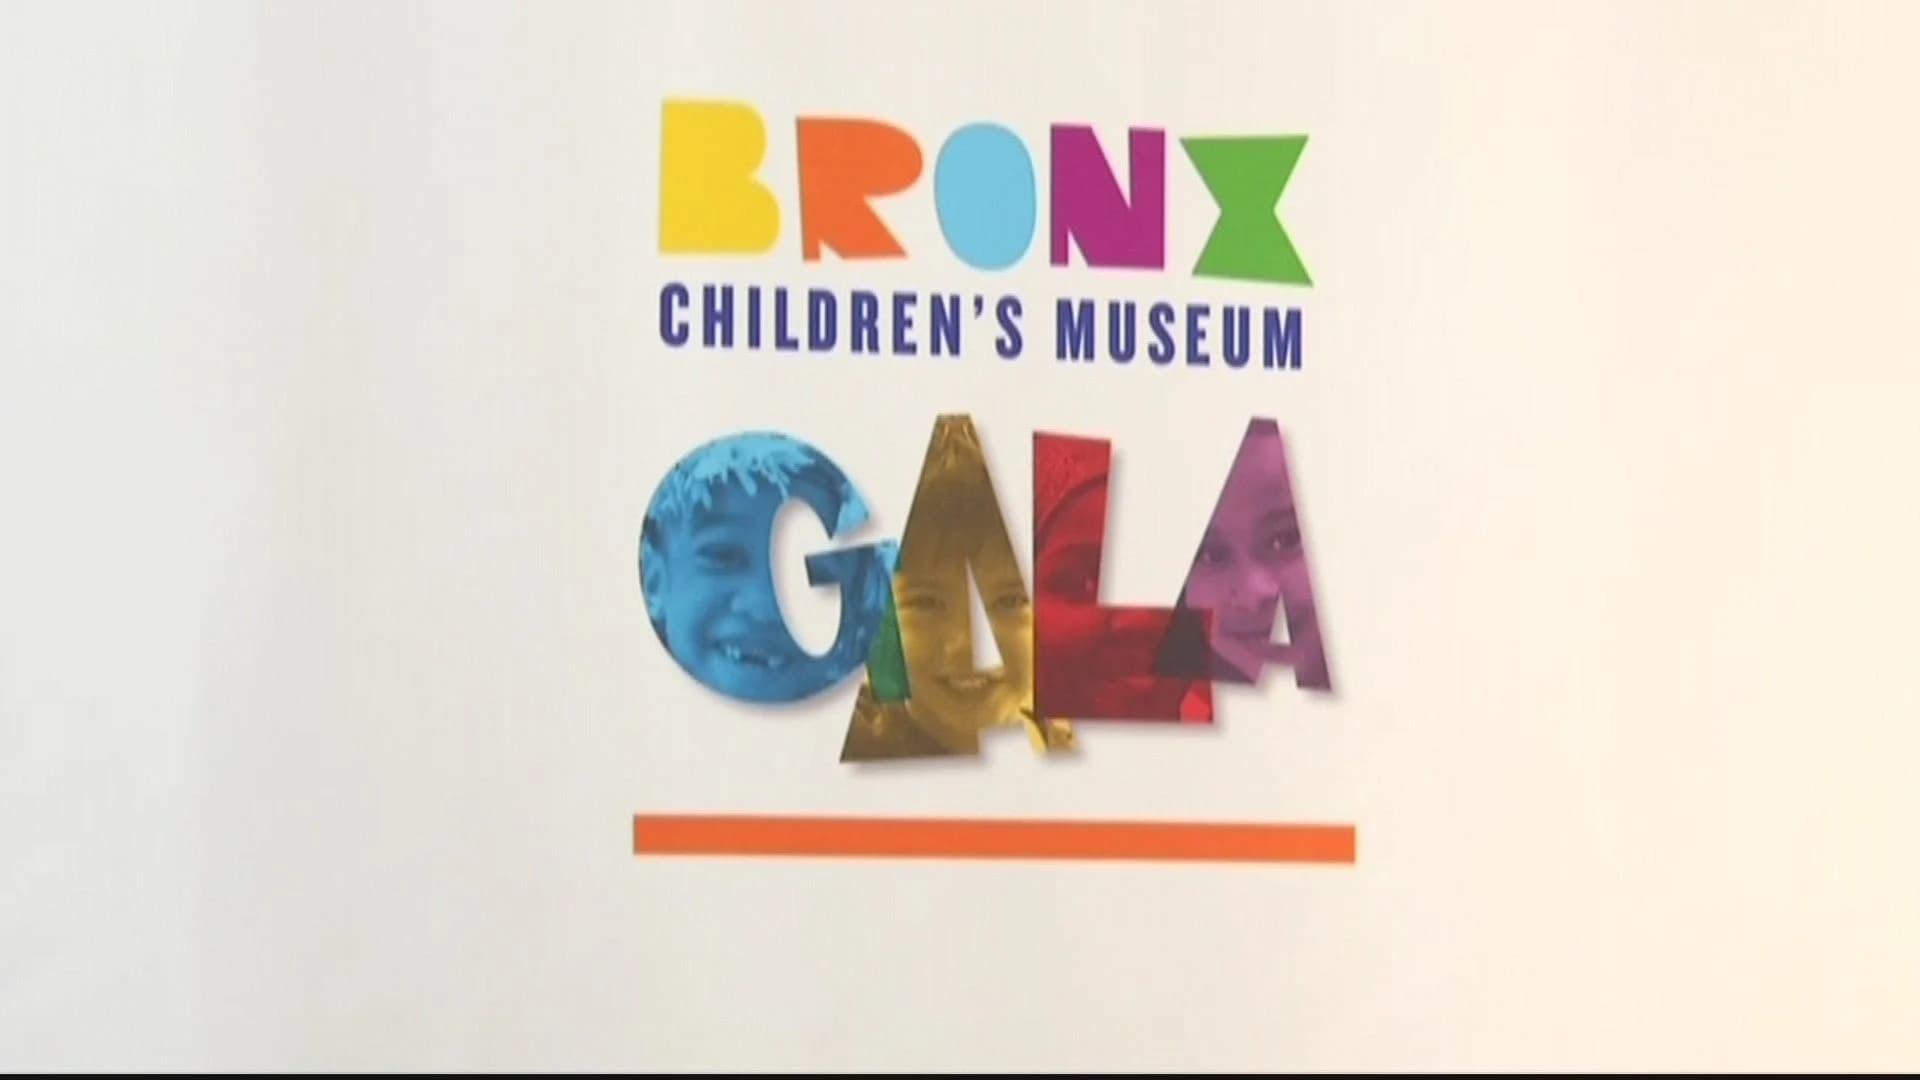 Kerry Washington honored at Bronx Children's Museum Gala